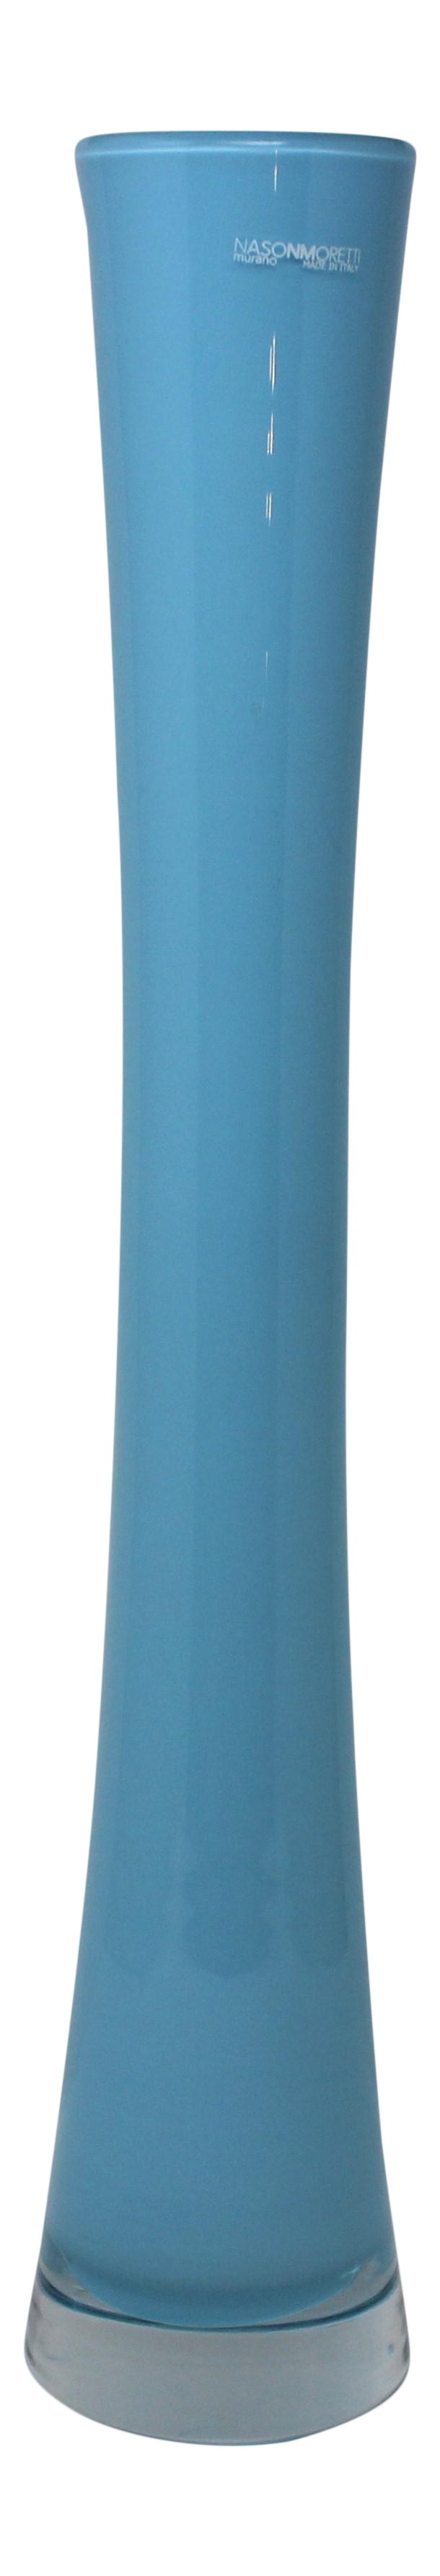 Nason Moretti - Modi Blue Vase by Nason Moretti